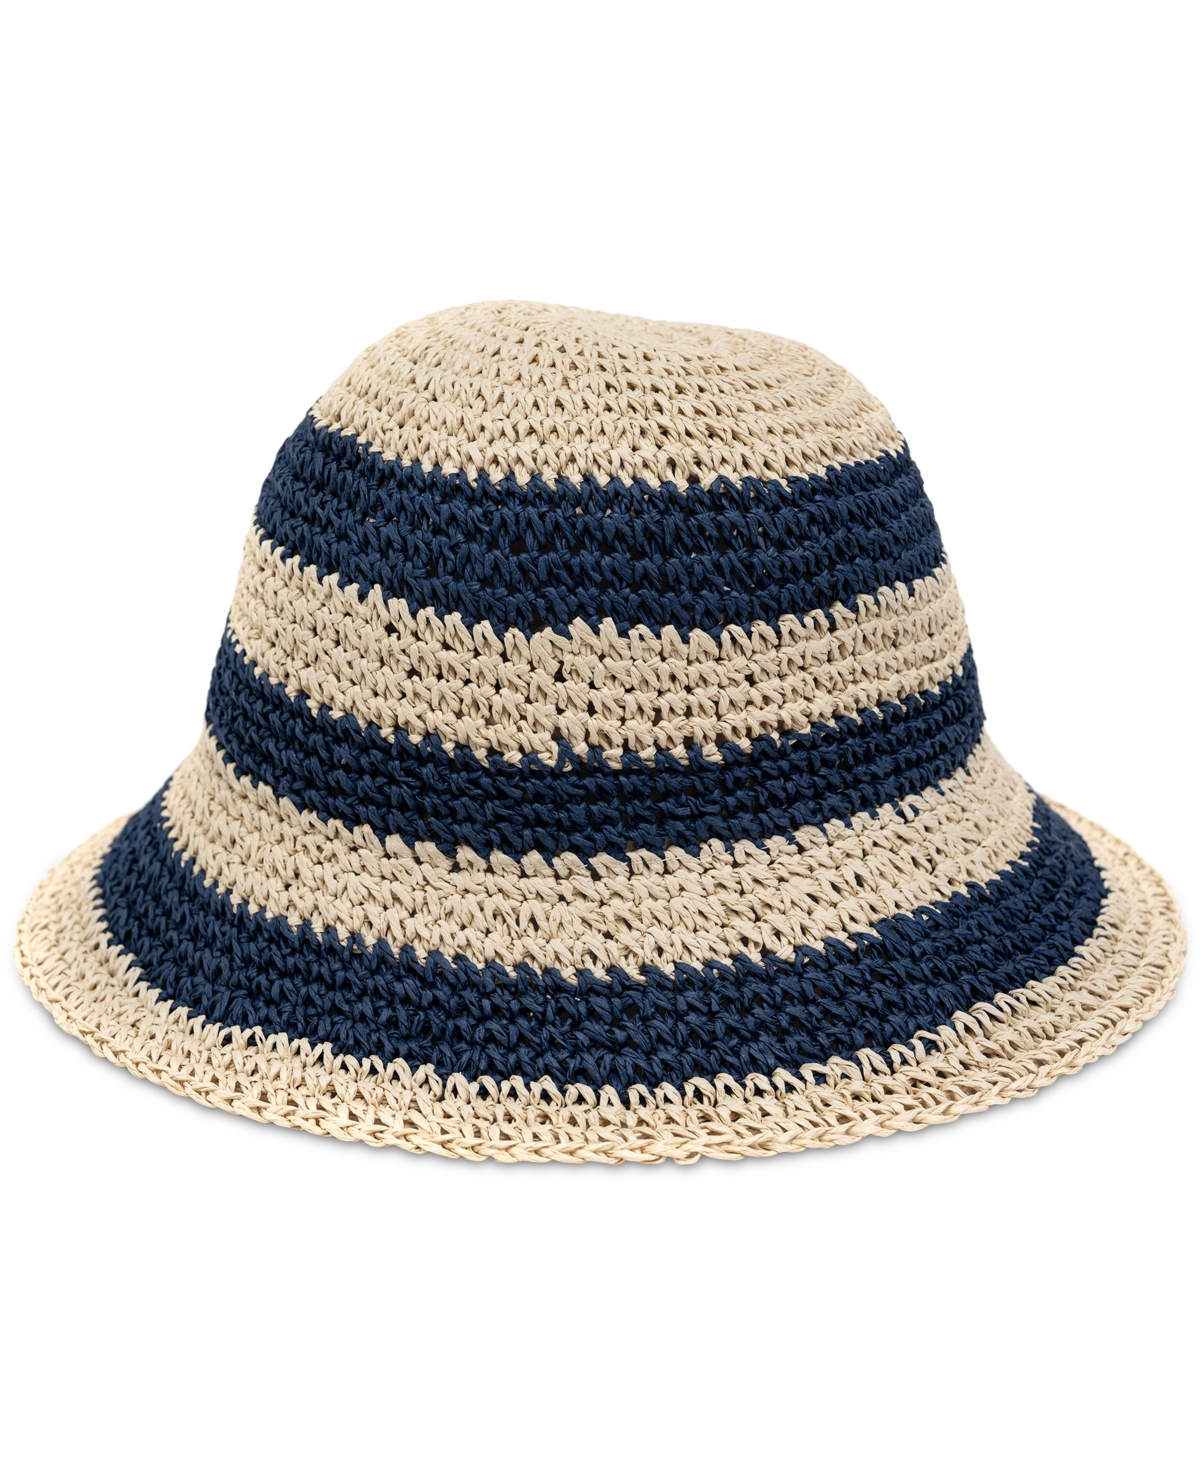 Women's Striped Crochet Cloche Hat, Created for Macy's - Navy